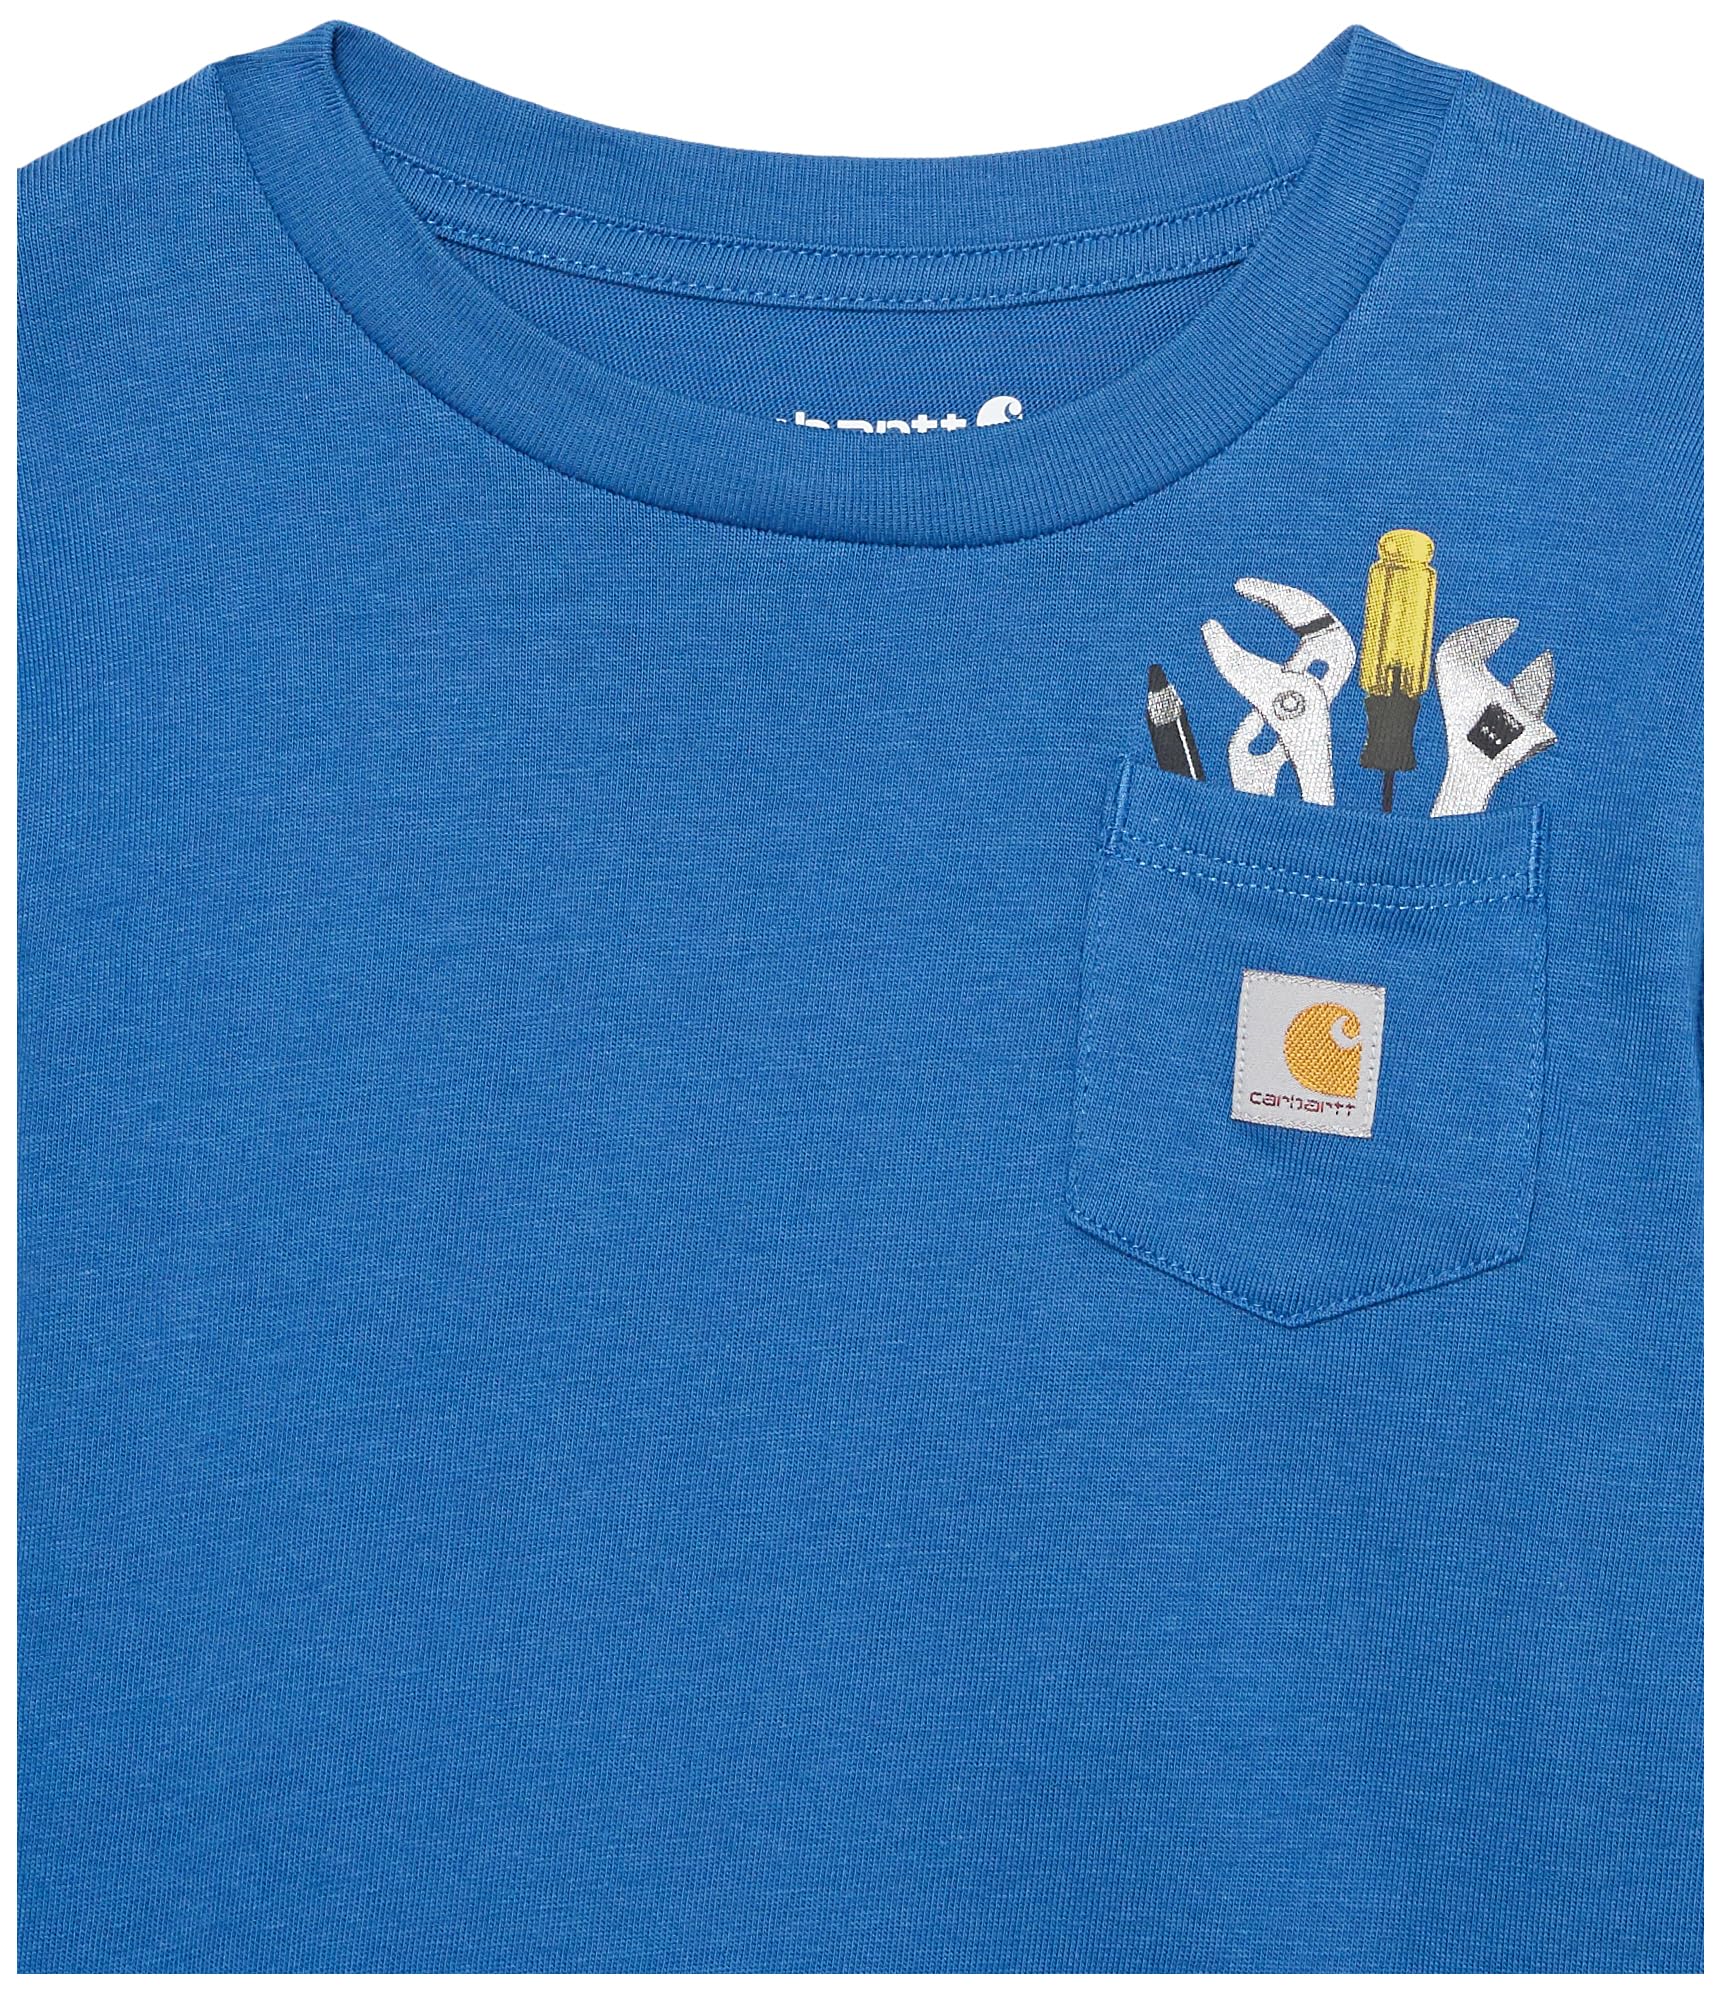 Carhartt Boys' Toddler Long-Sleeve Graphic T-Shirt